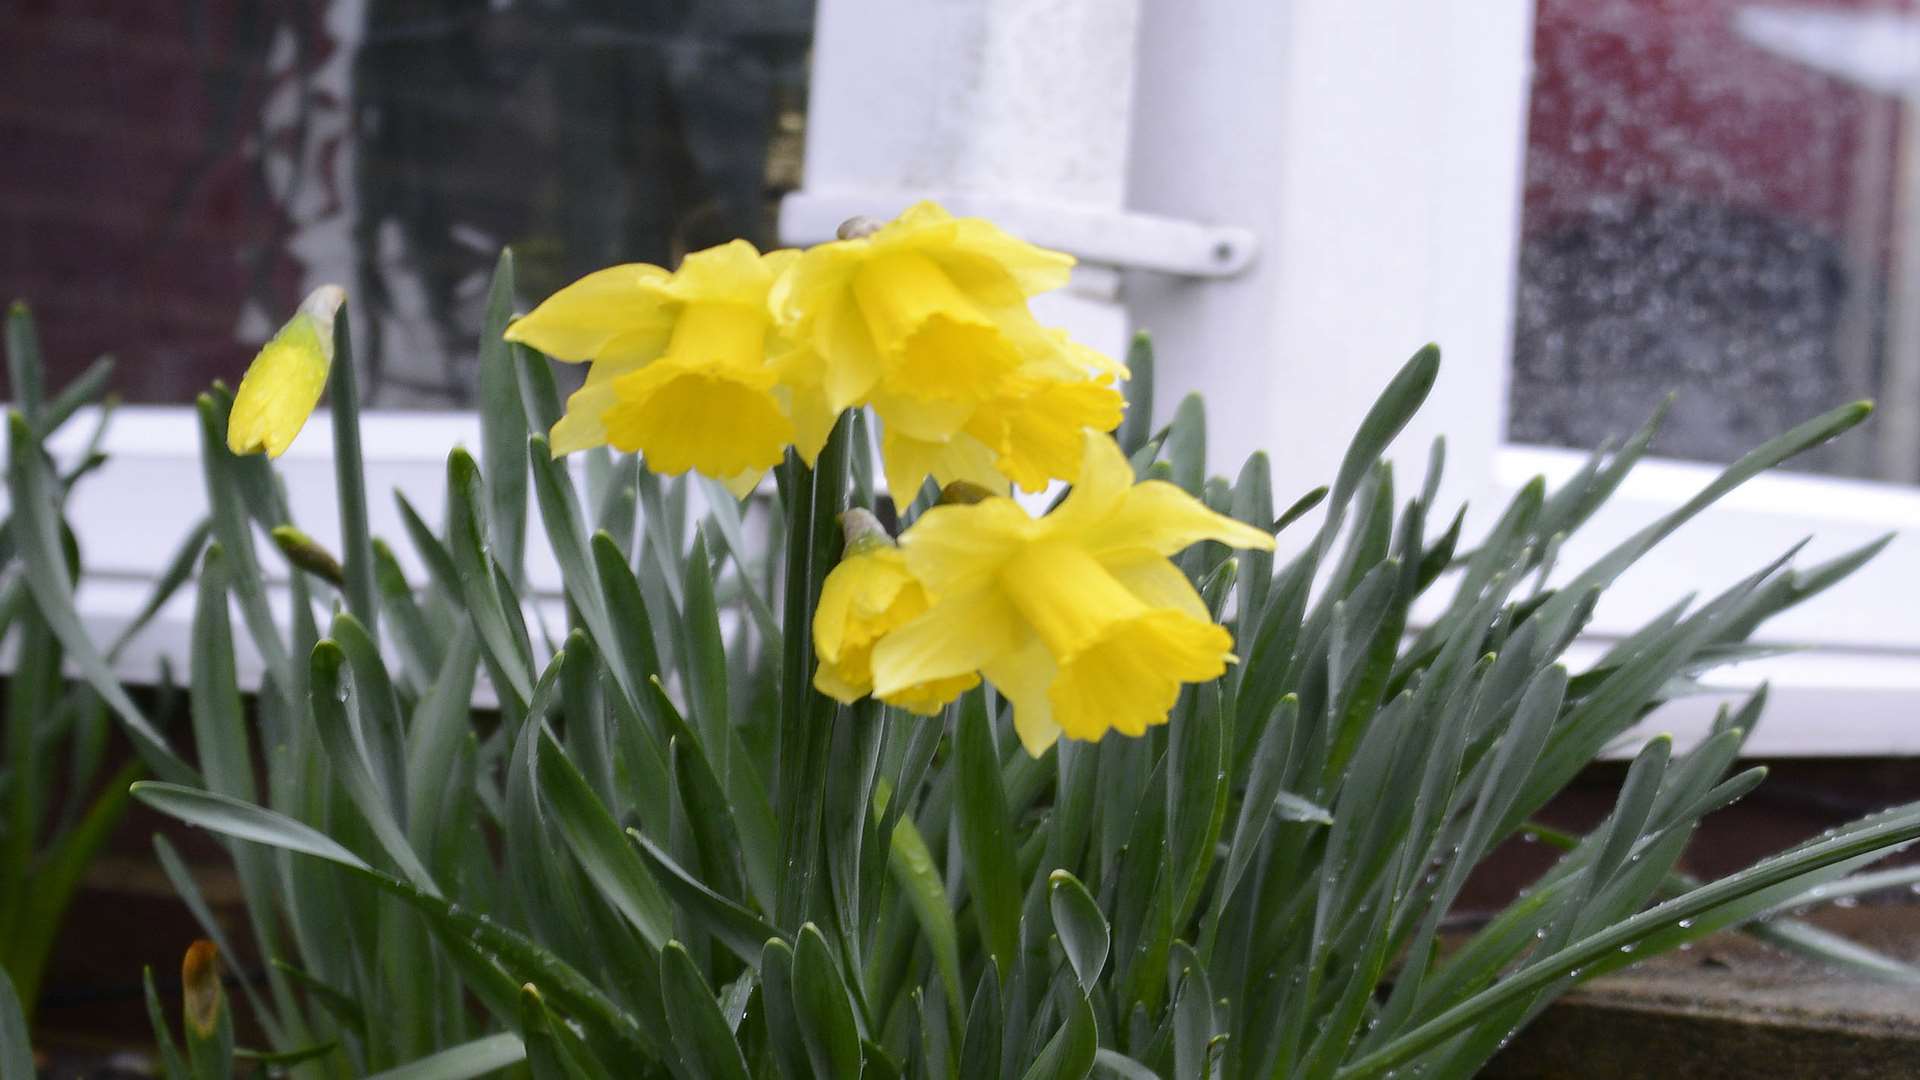 Daffodils are in bloom in Ashford